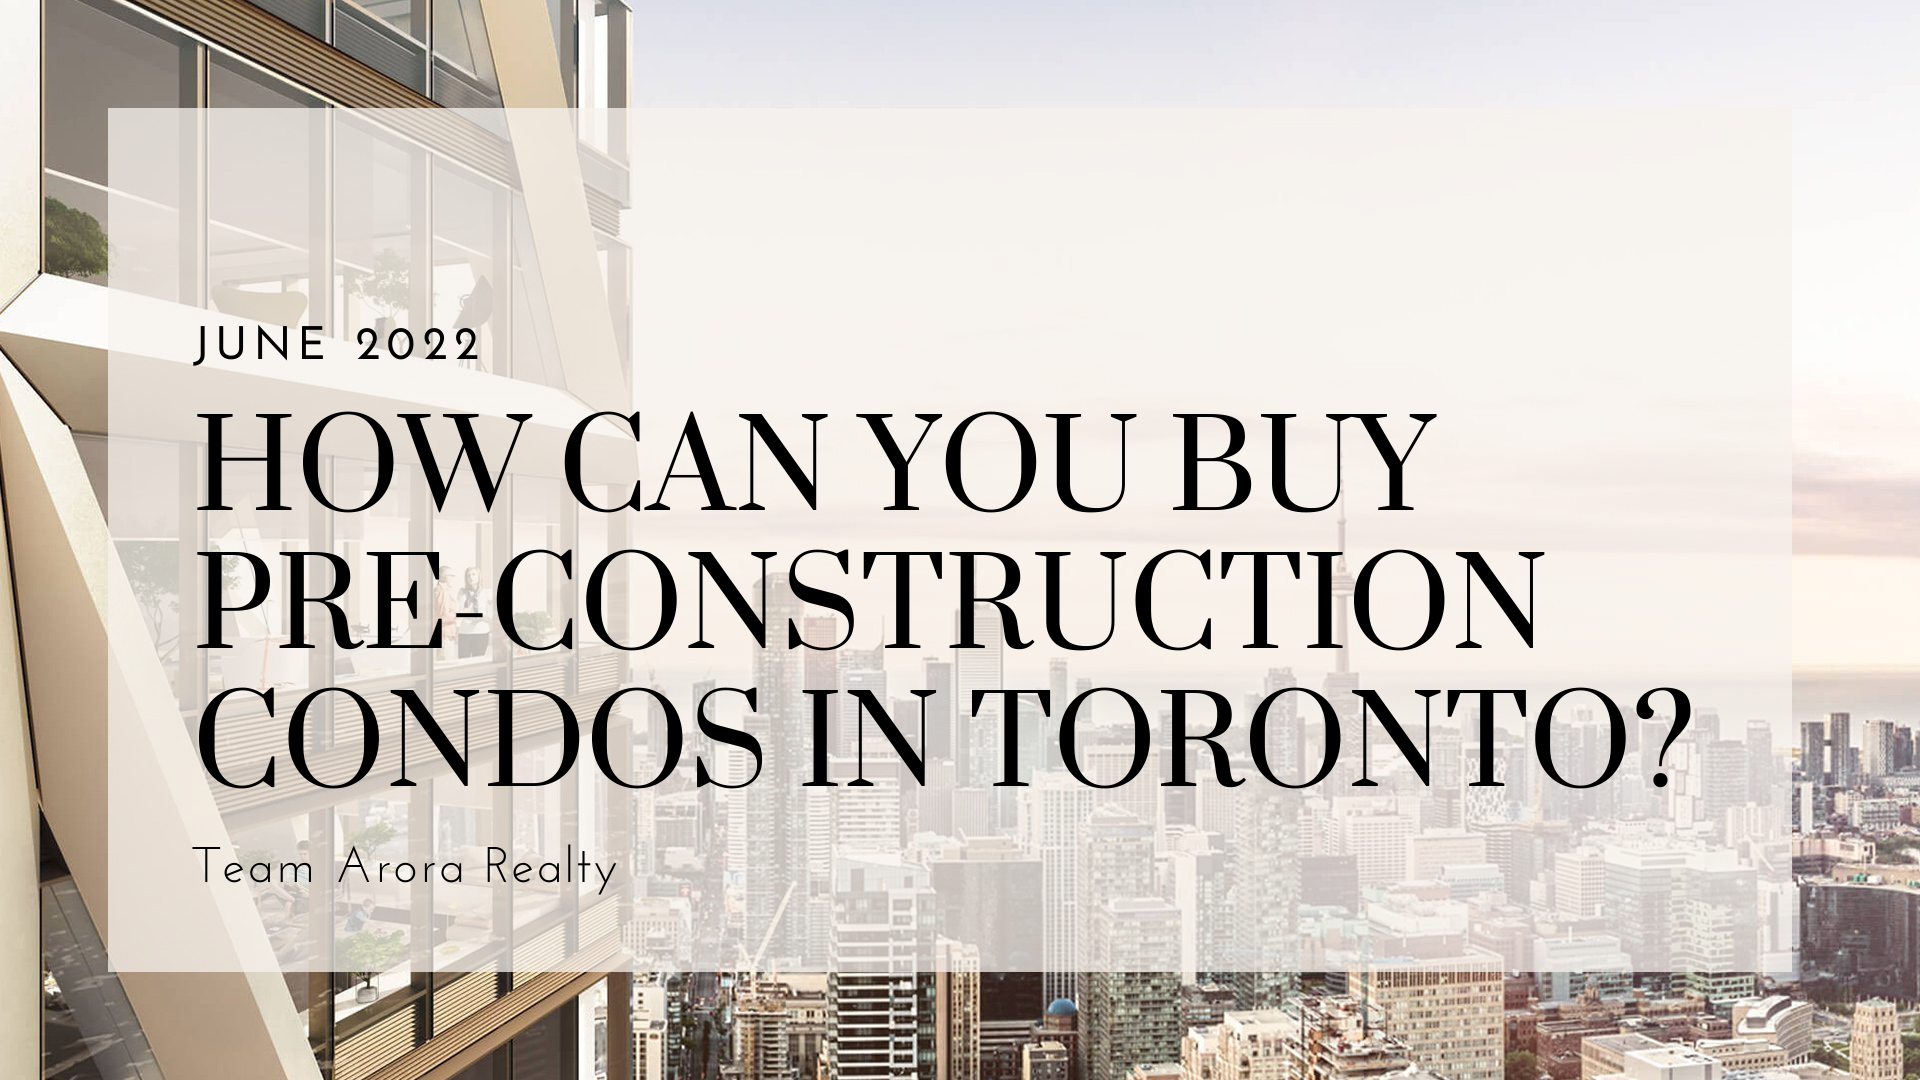 How can you buy pre-construction condos in Toronto?